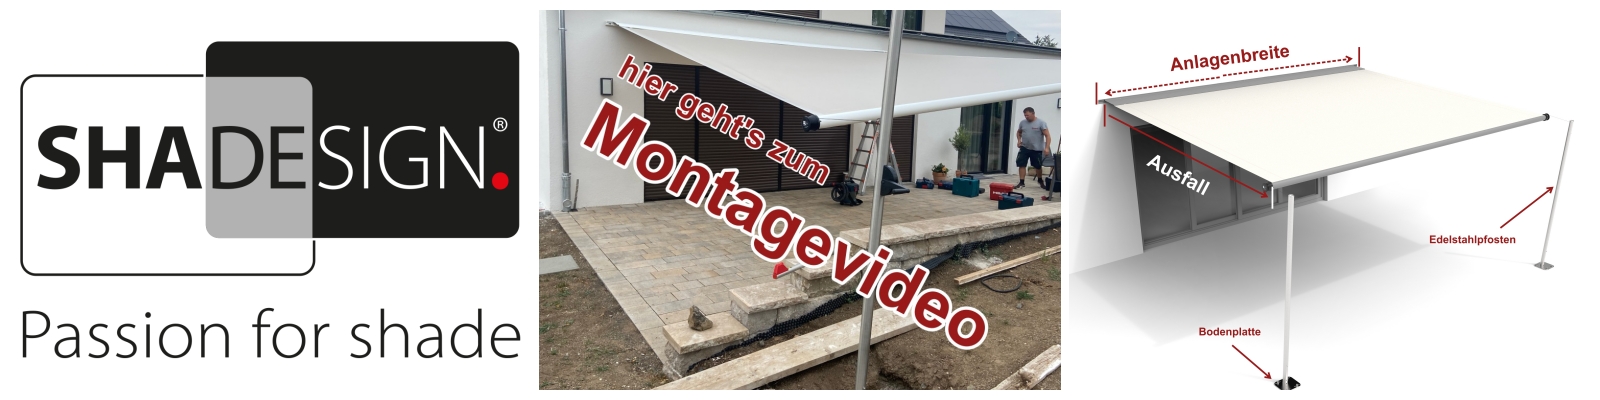 Montagevideo_vorlage_shadesign_markisen_made_in_germany